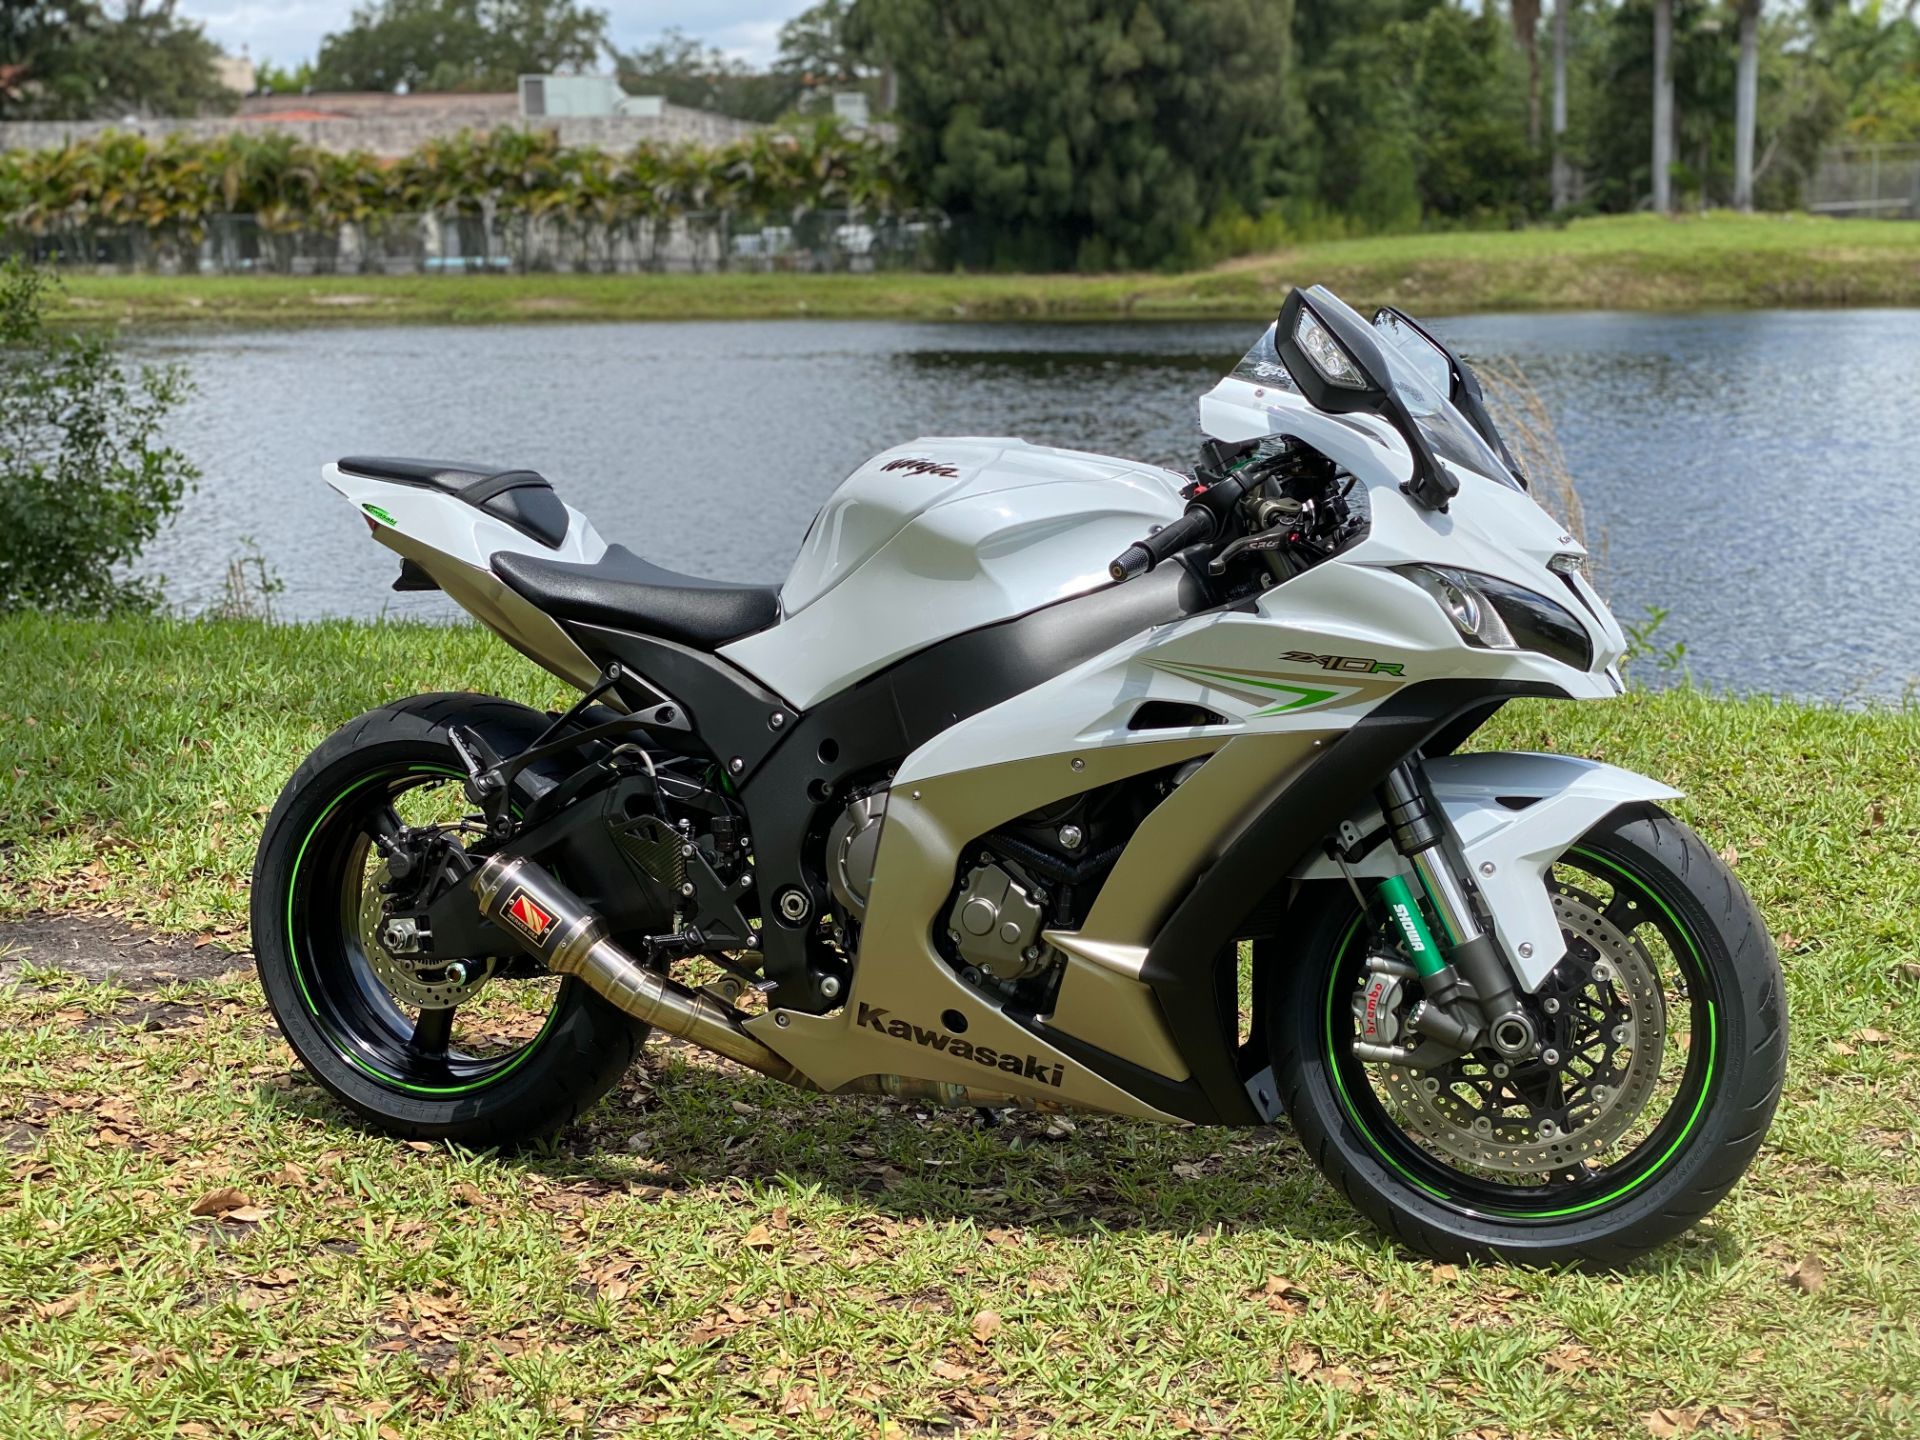 acantilado Pigmento Golpe fuerte Certified Pre-Owned 2017 Kawasaki Ninja ZX-10R Pearl Blizzard White /  Metallic Flat Raw Titanium | Motorcycles in North Miami Beach FL |  KAW005346X